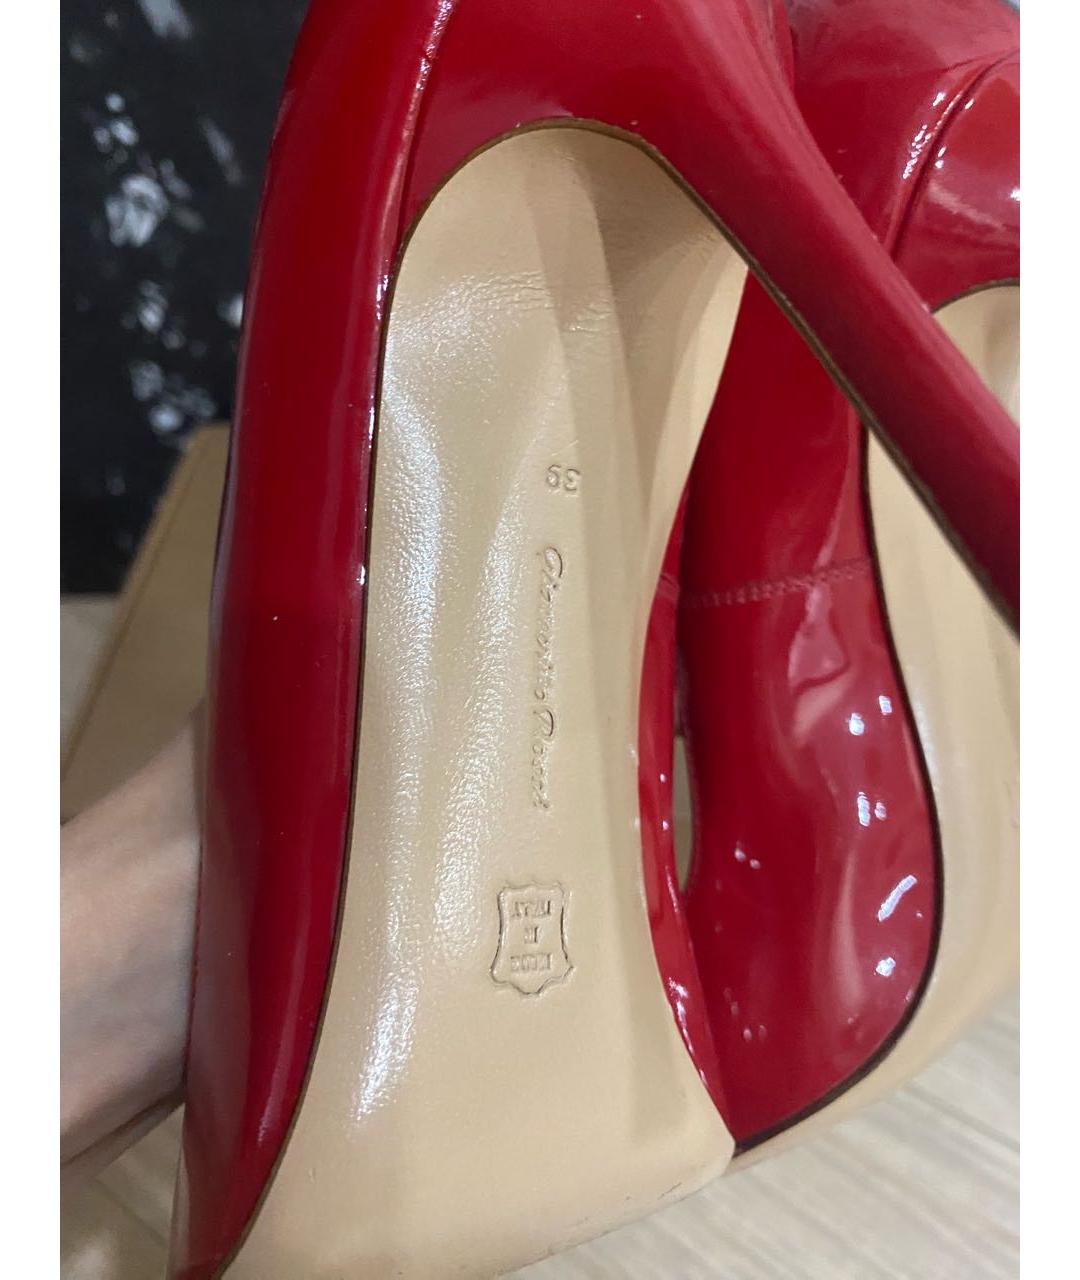 GIANVITO ROSSI Красные туфли из лакированной кожи, фото 8